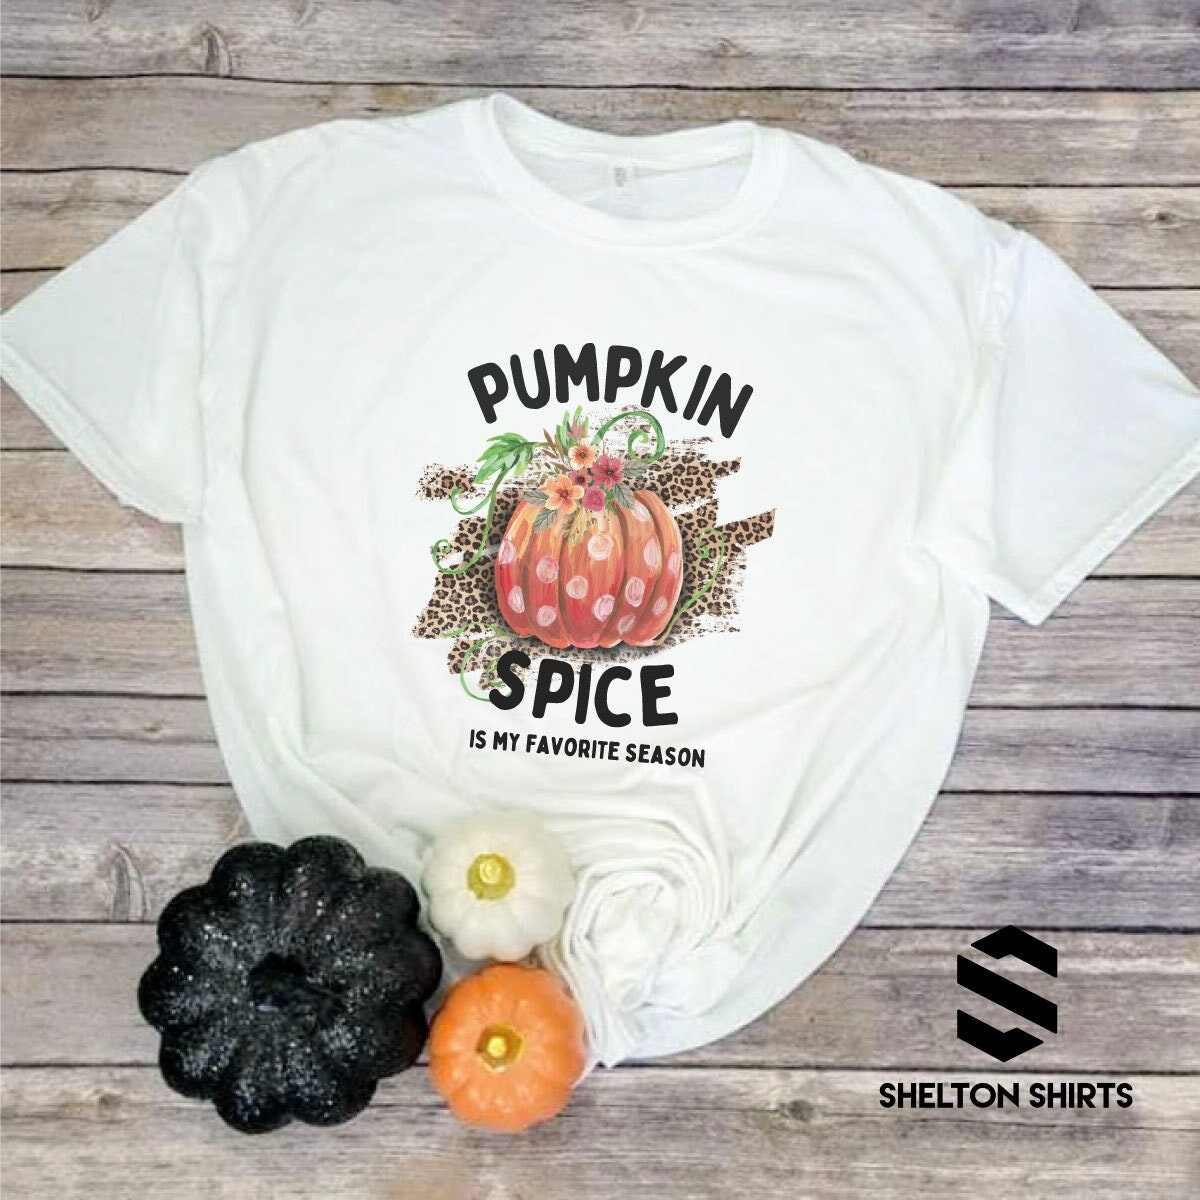 Pumpkin Spice is My Favorite Season with Polka Dot Pumpkin, Leopard Print and Flowers T-Shirt